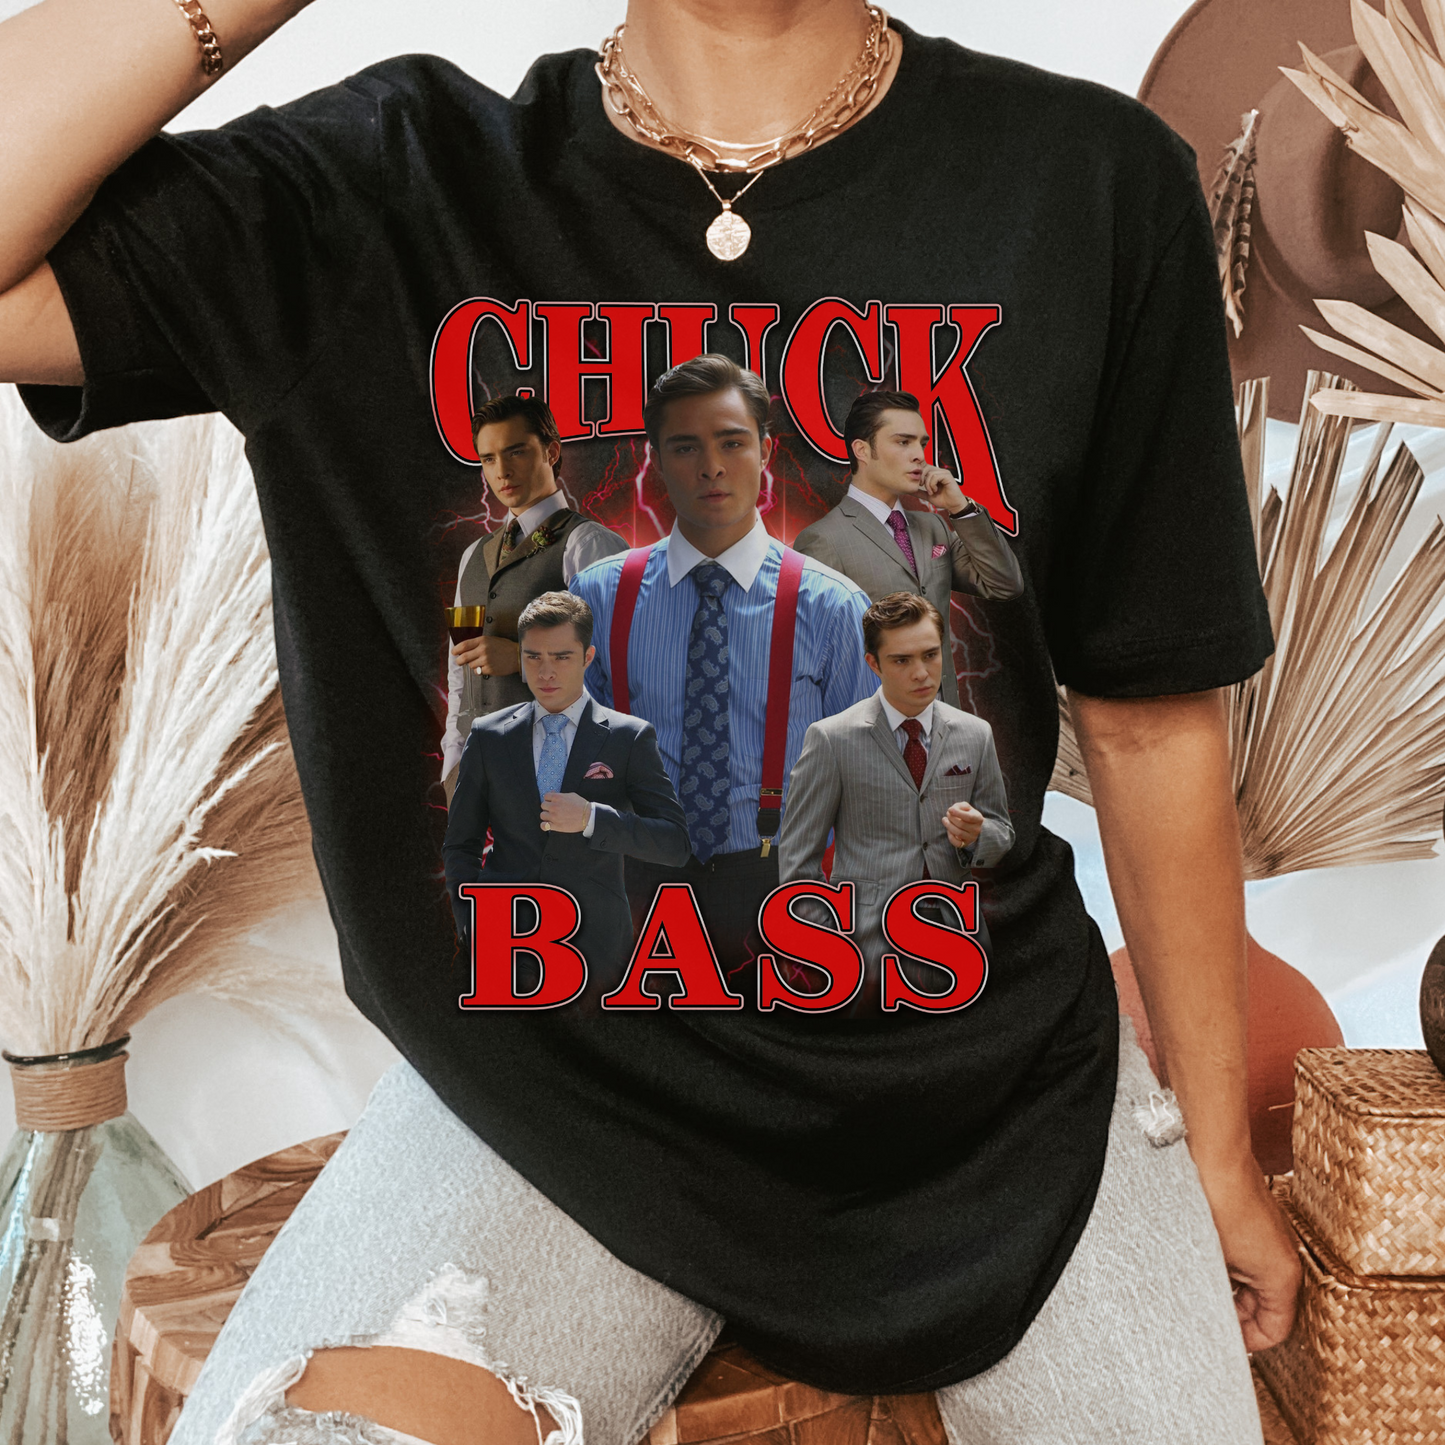 Chuck Bass 90s Tshirt